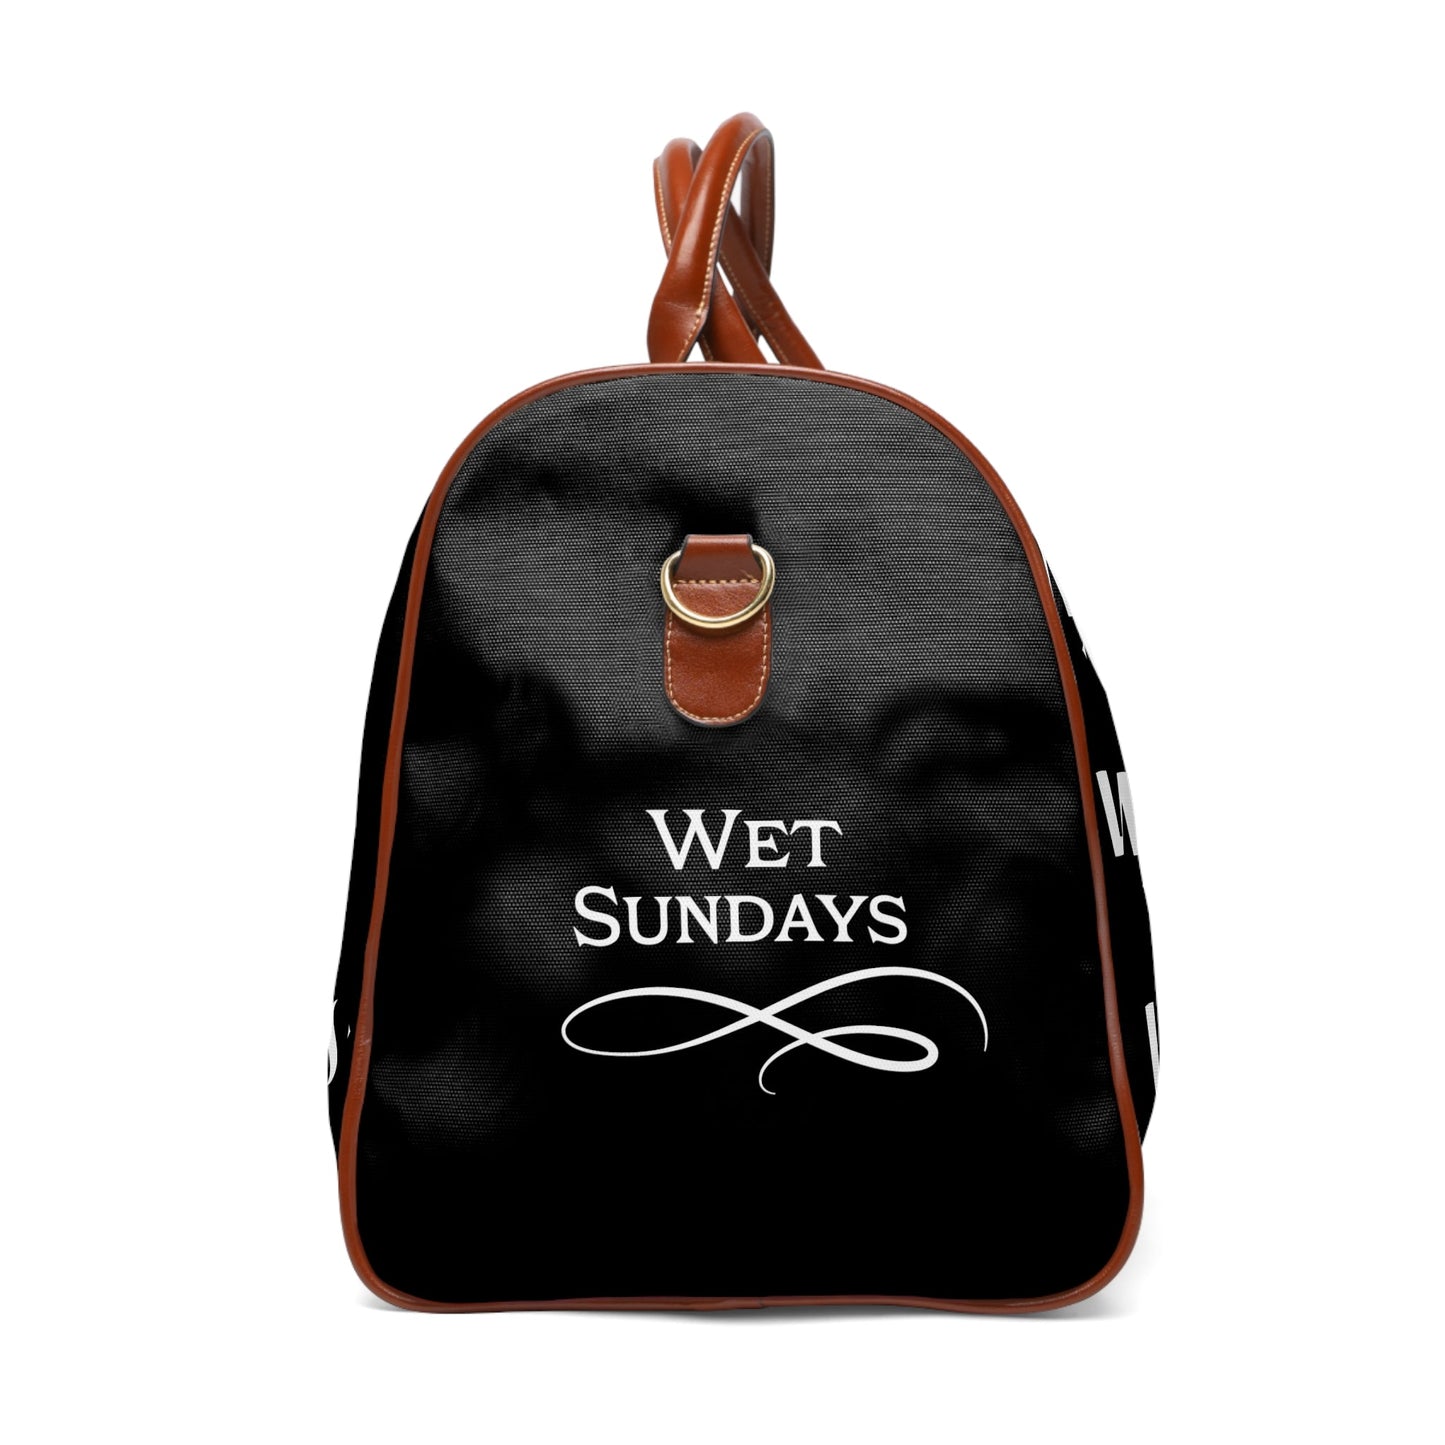 Waterproof Travel Bag - Wet Sundays